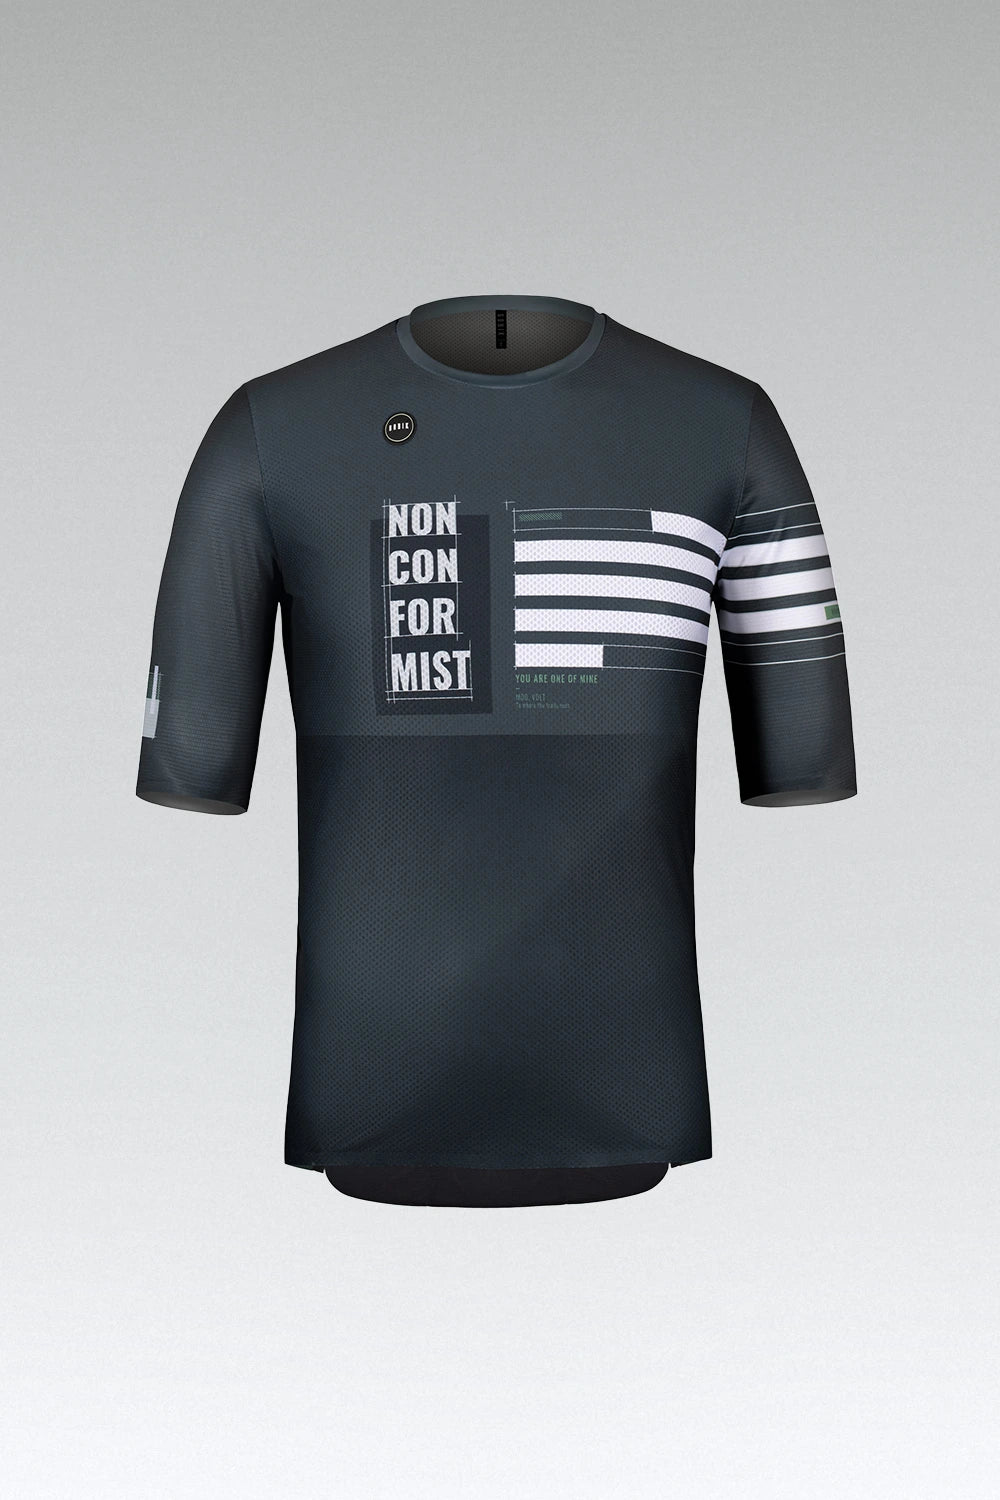 VOLT CHARCOAL - T-shirt - Short sleeve - Men – Gobik